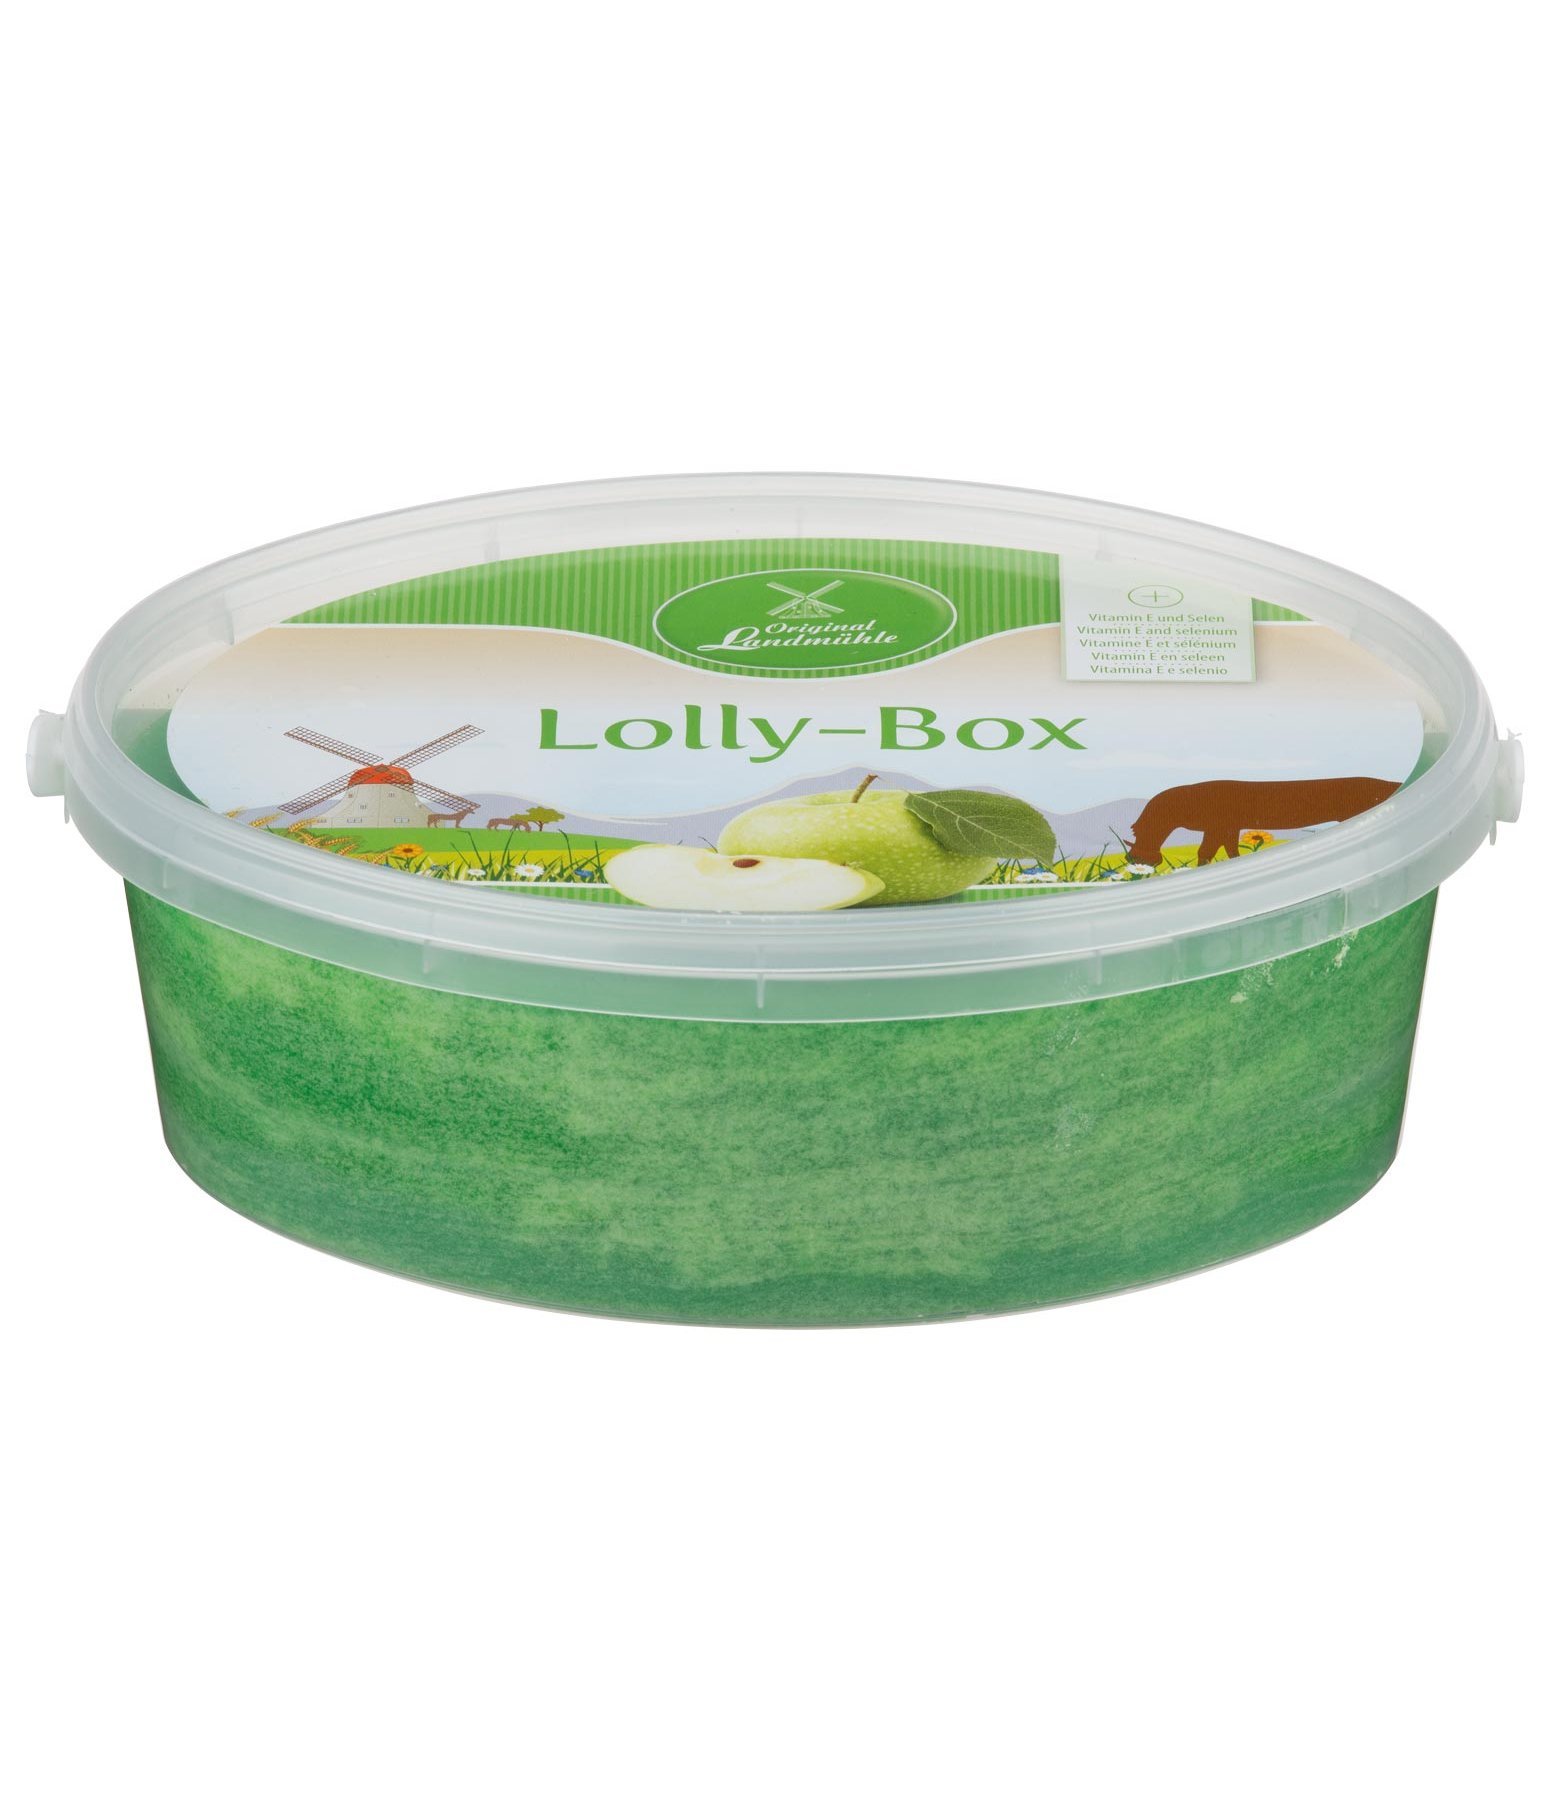 Lolly-Box Apple